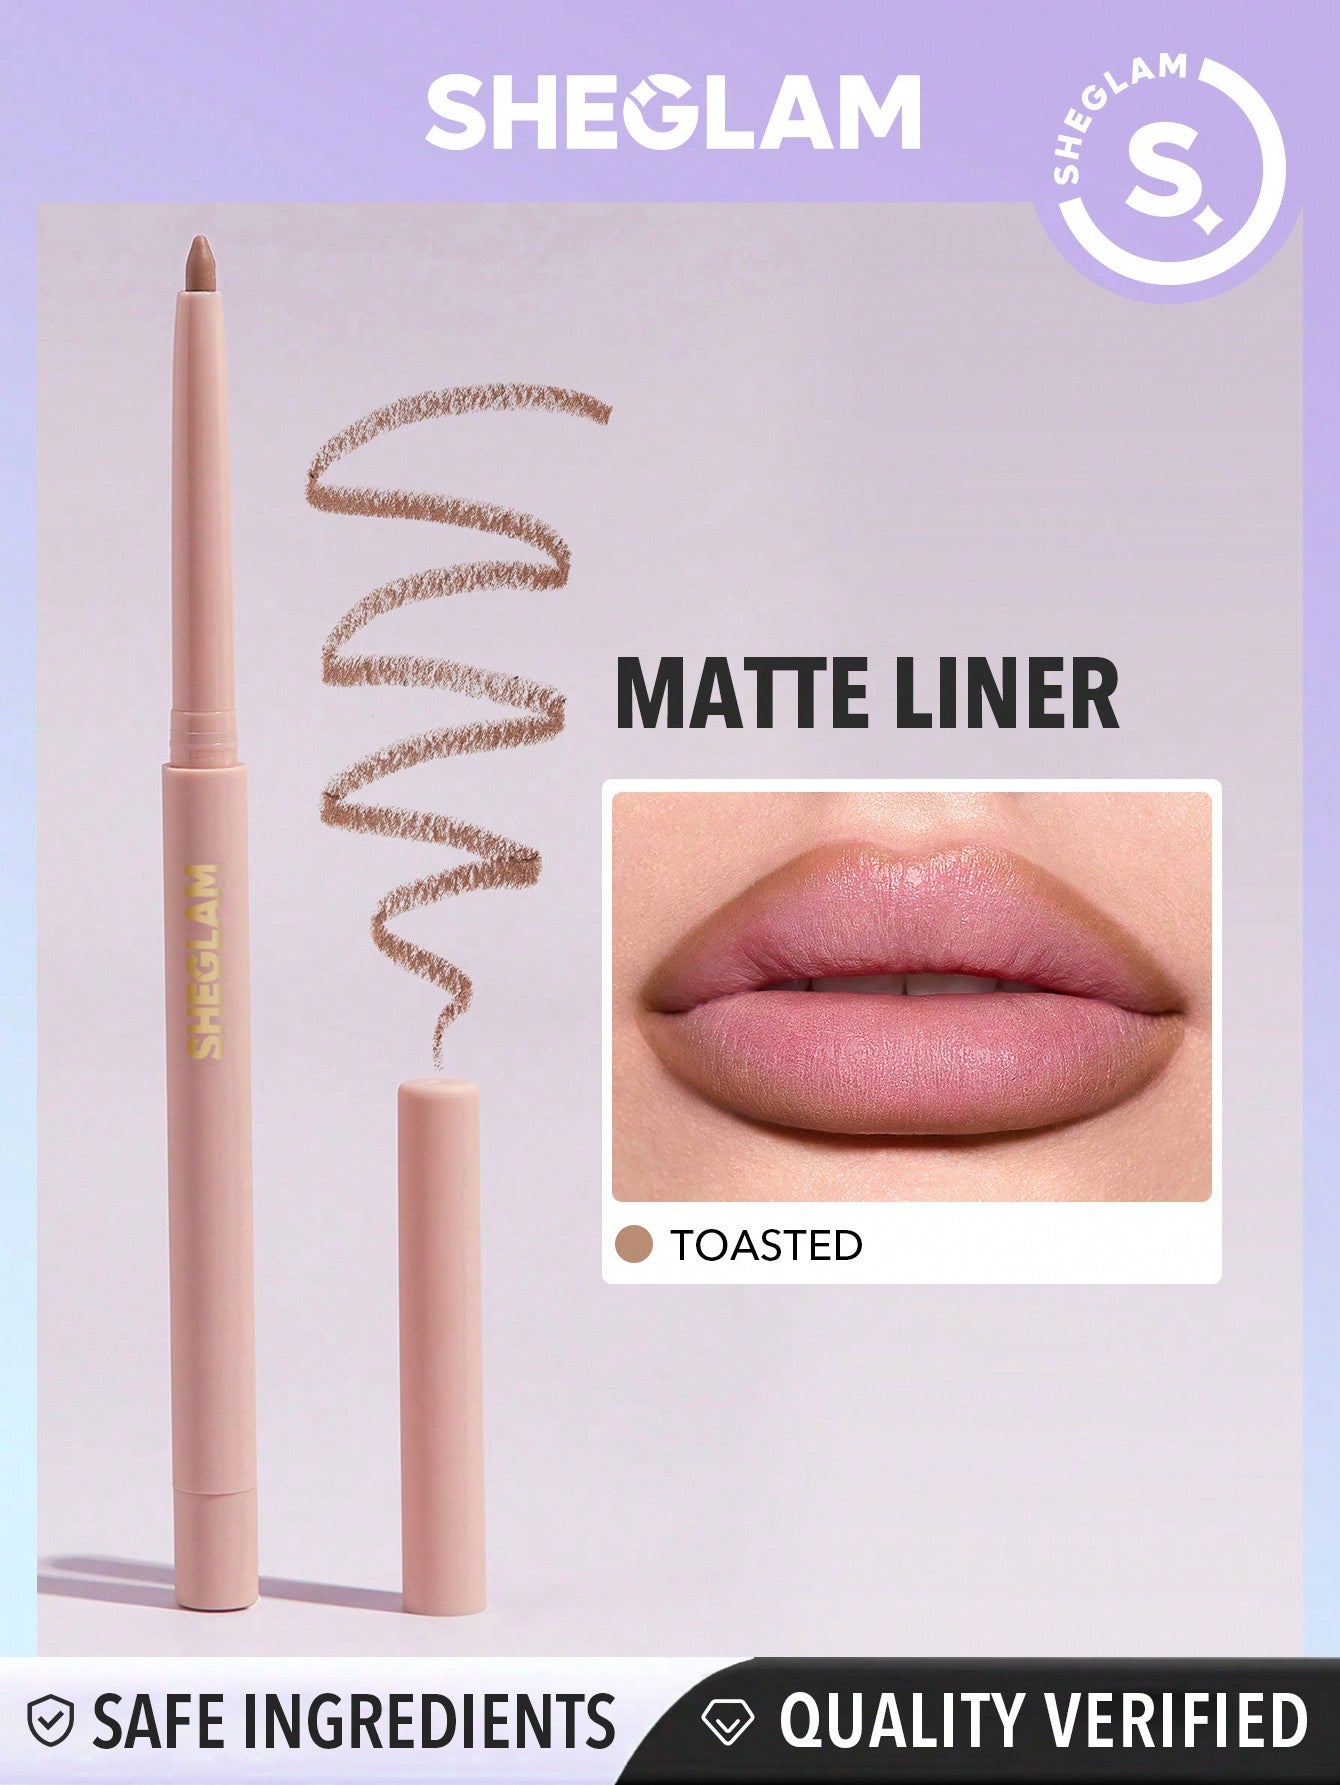 SHEGLAM So Lippy Lip Liner-Concrete Jungle Creamy Matte Lip Liner Pencil High Pigment Not Easy to Fade Silky Smooth Matte Contour Tint Lip Makeup